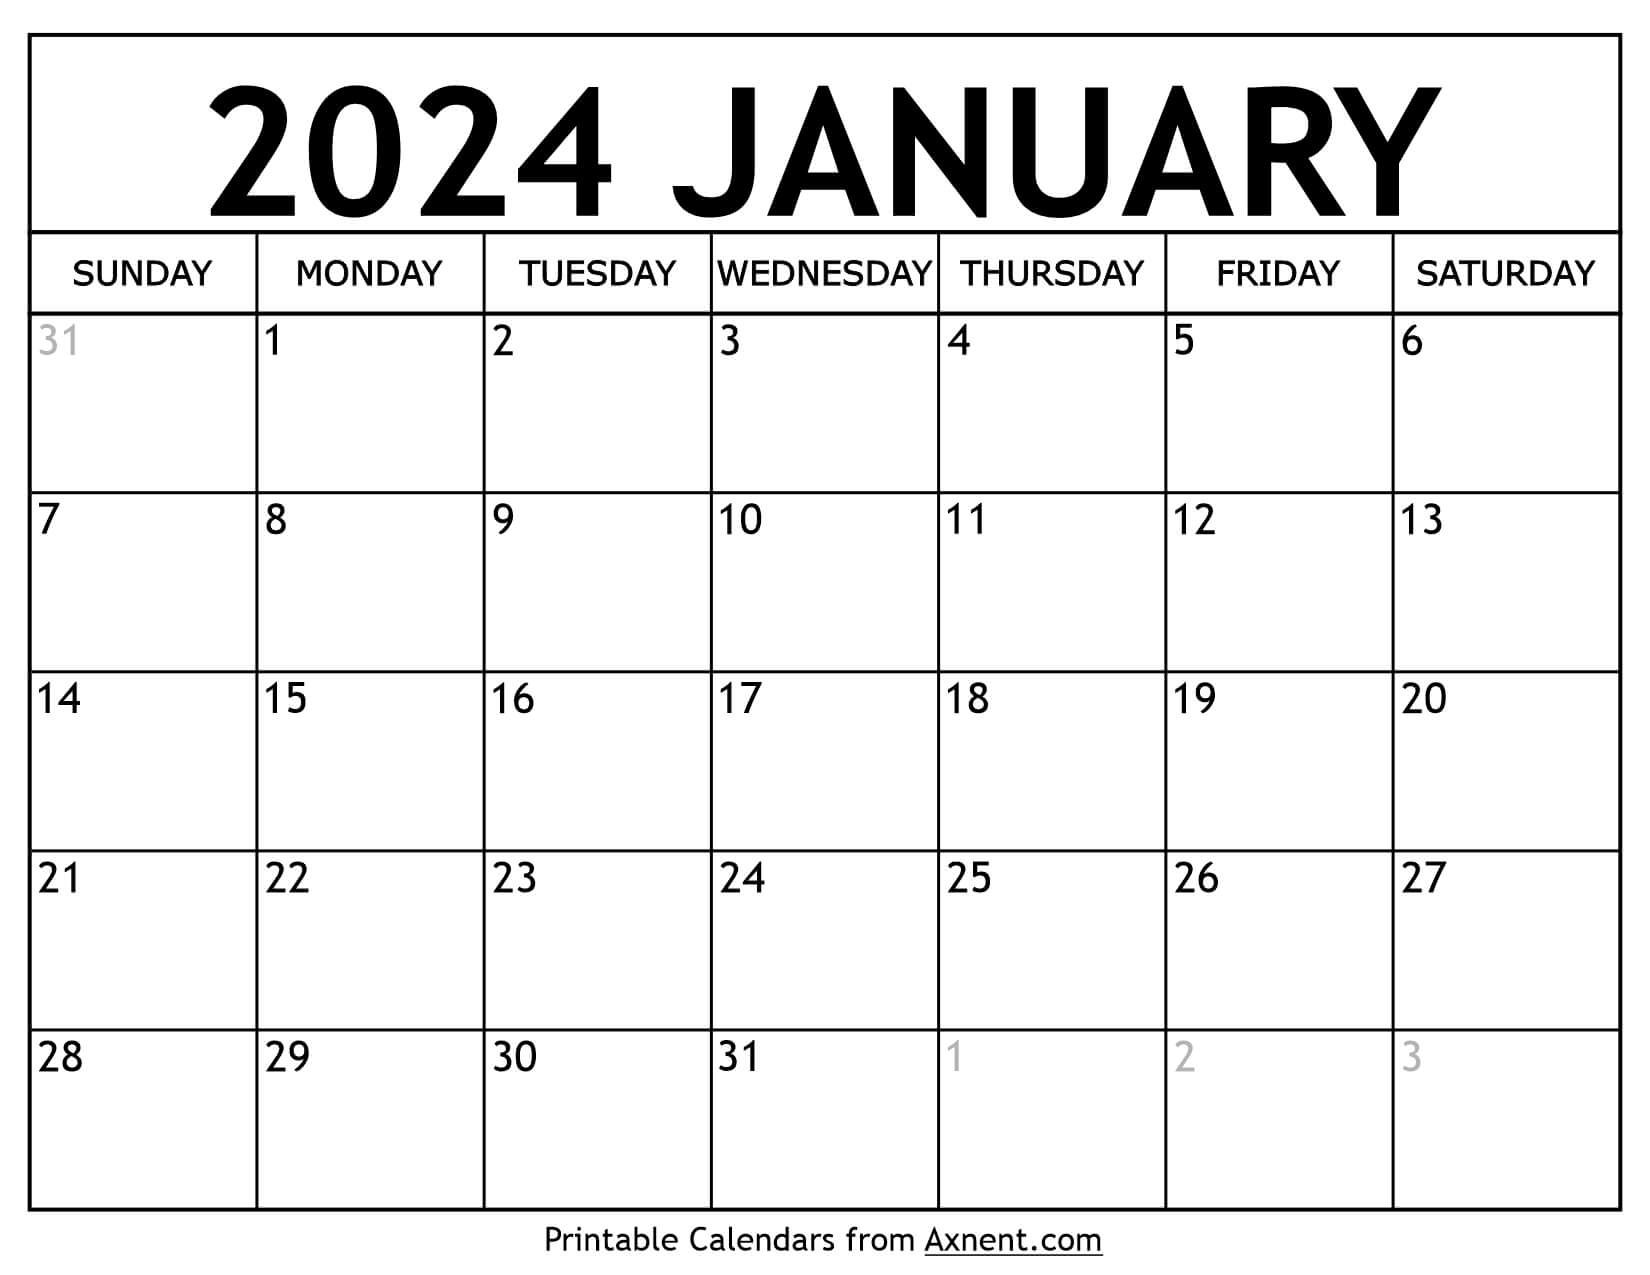 Printable January 2024 Calendar Template - Print Now for 2024 January Free Printable Calendar